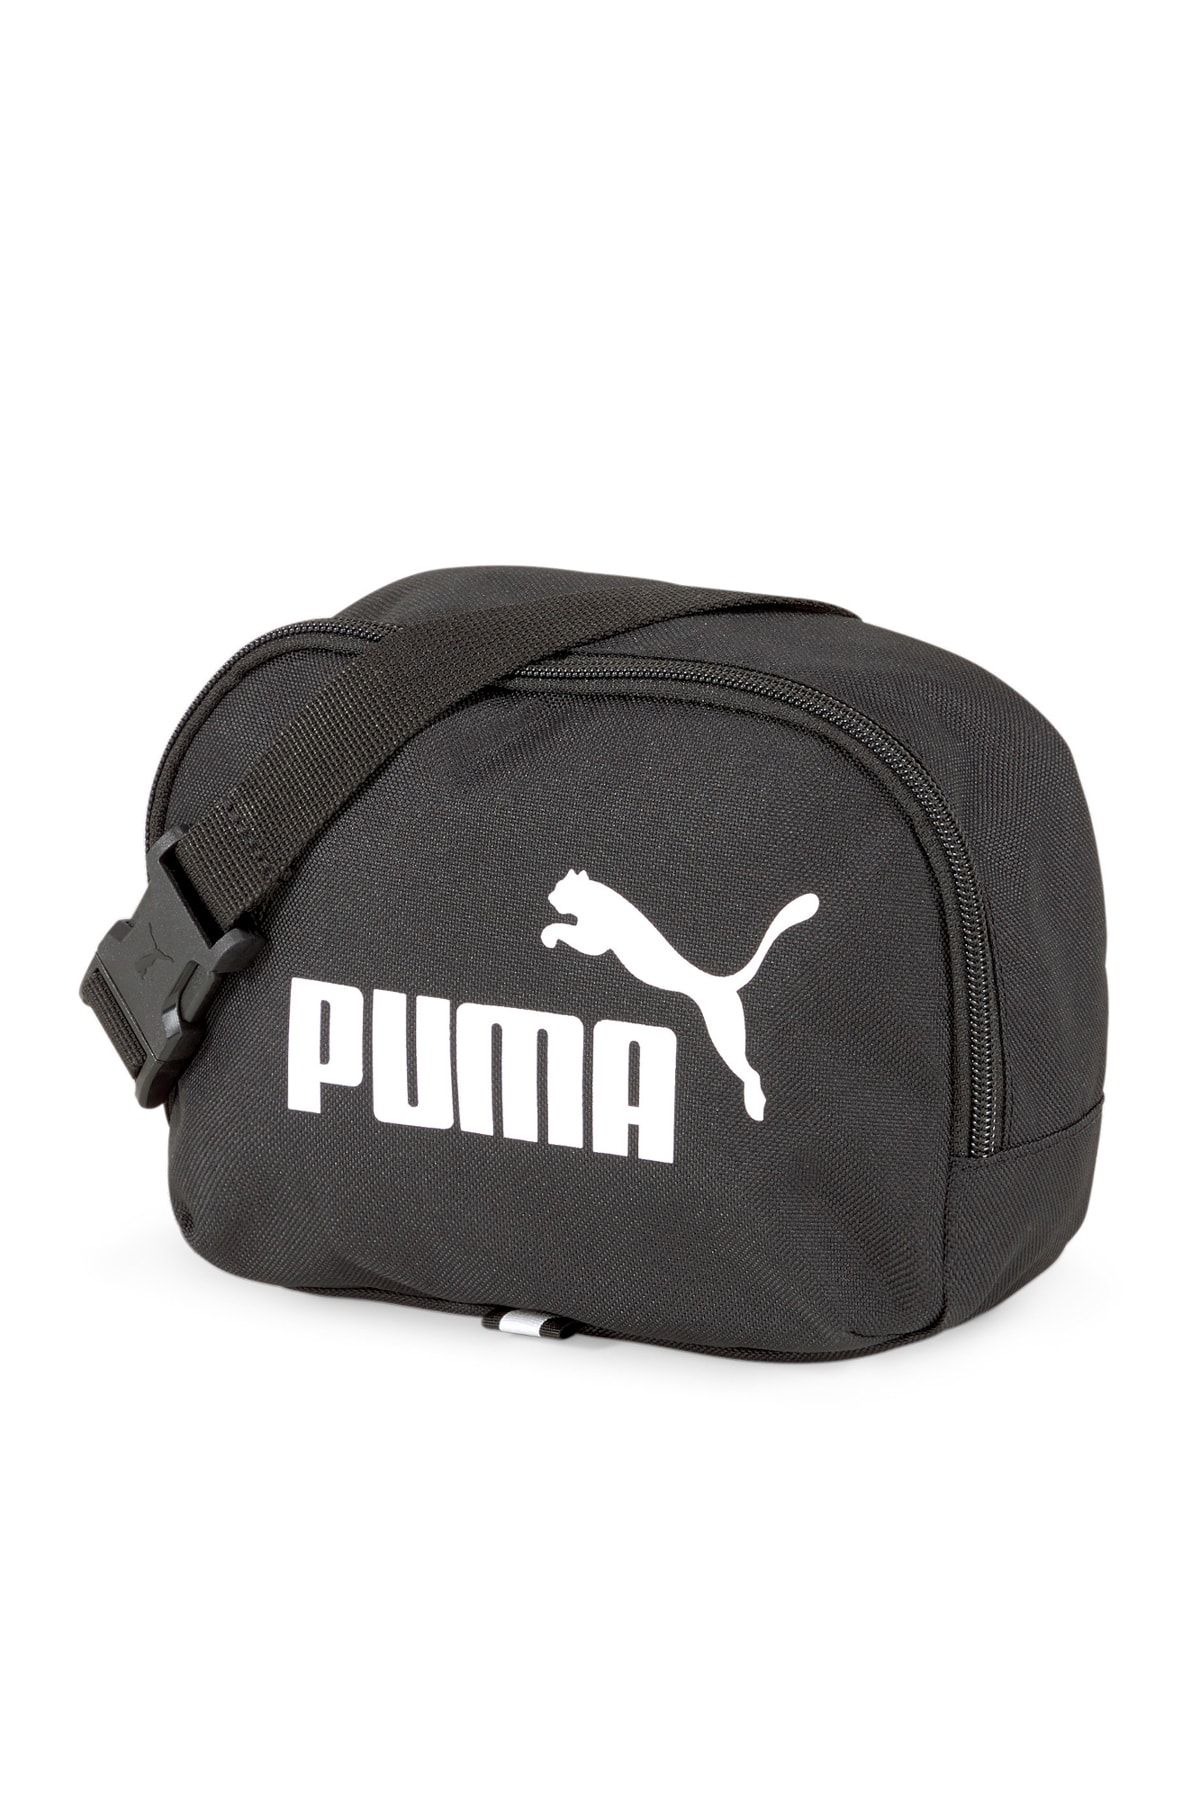 Puma Phase Waıst Bag Siyah Bel Çantası